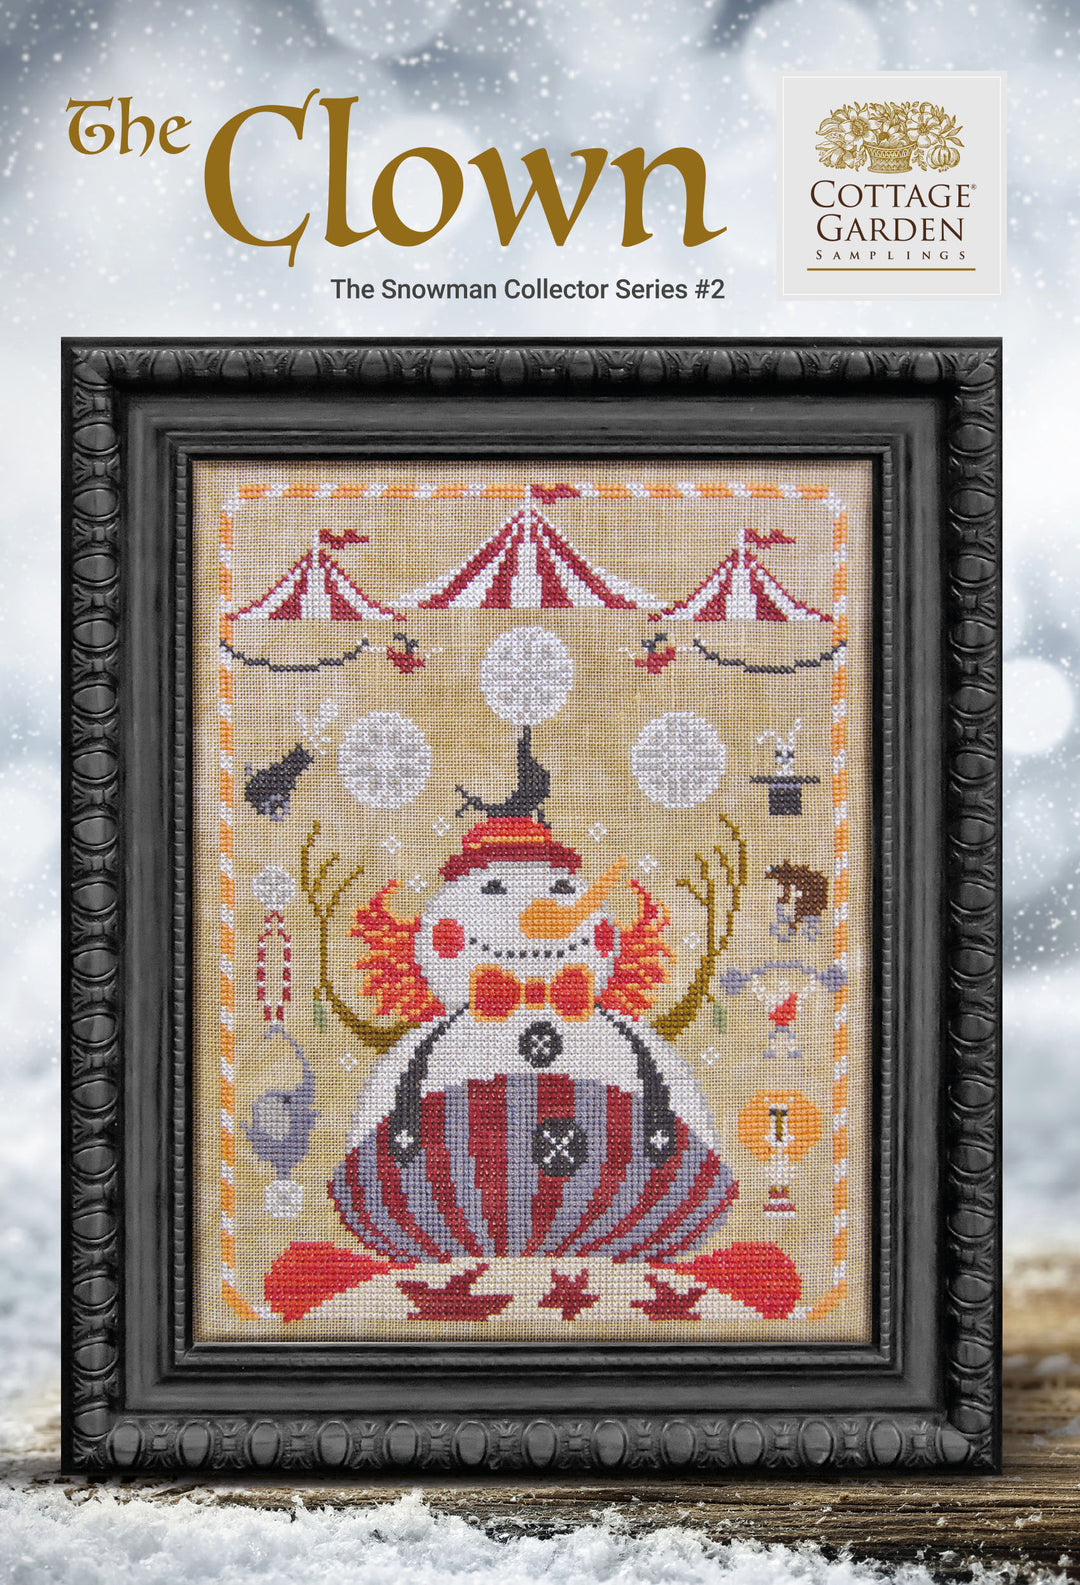 The Clown - Snowman Collector Series #2 | Cottage Garden Samplings